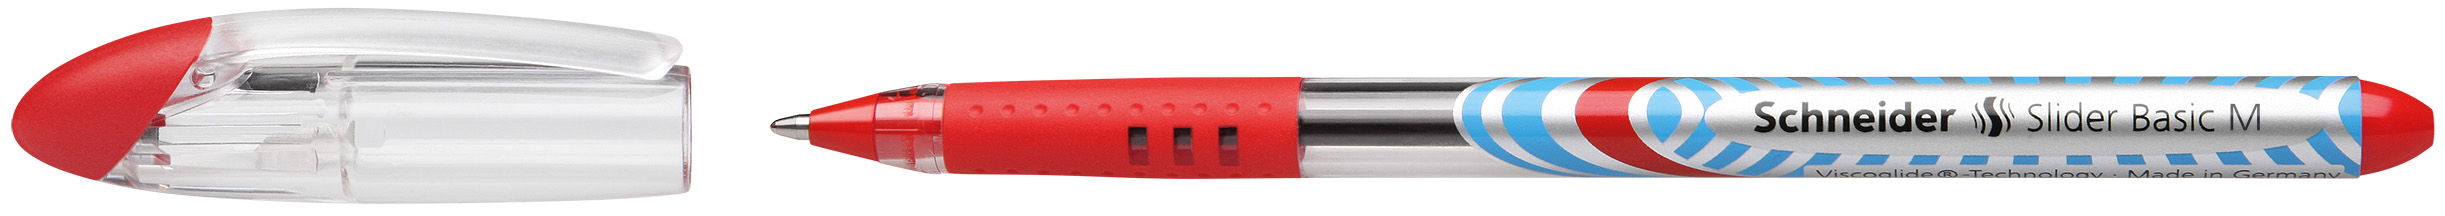 SCHNEIDER Stylo Slider Basic 1.0mm 151102 rouge, M